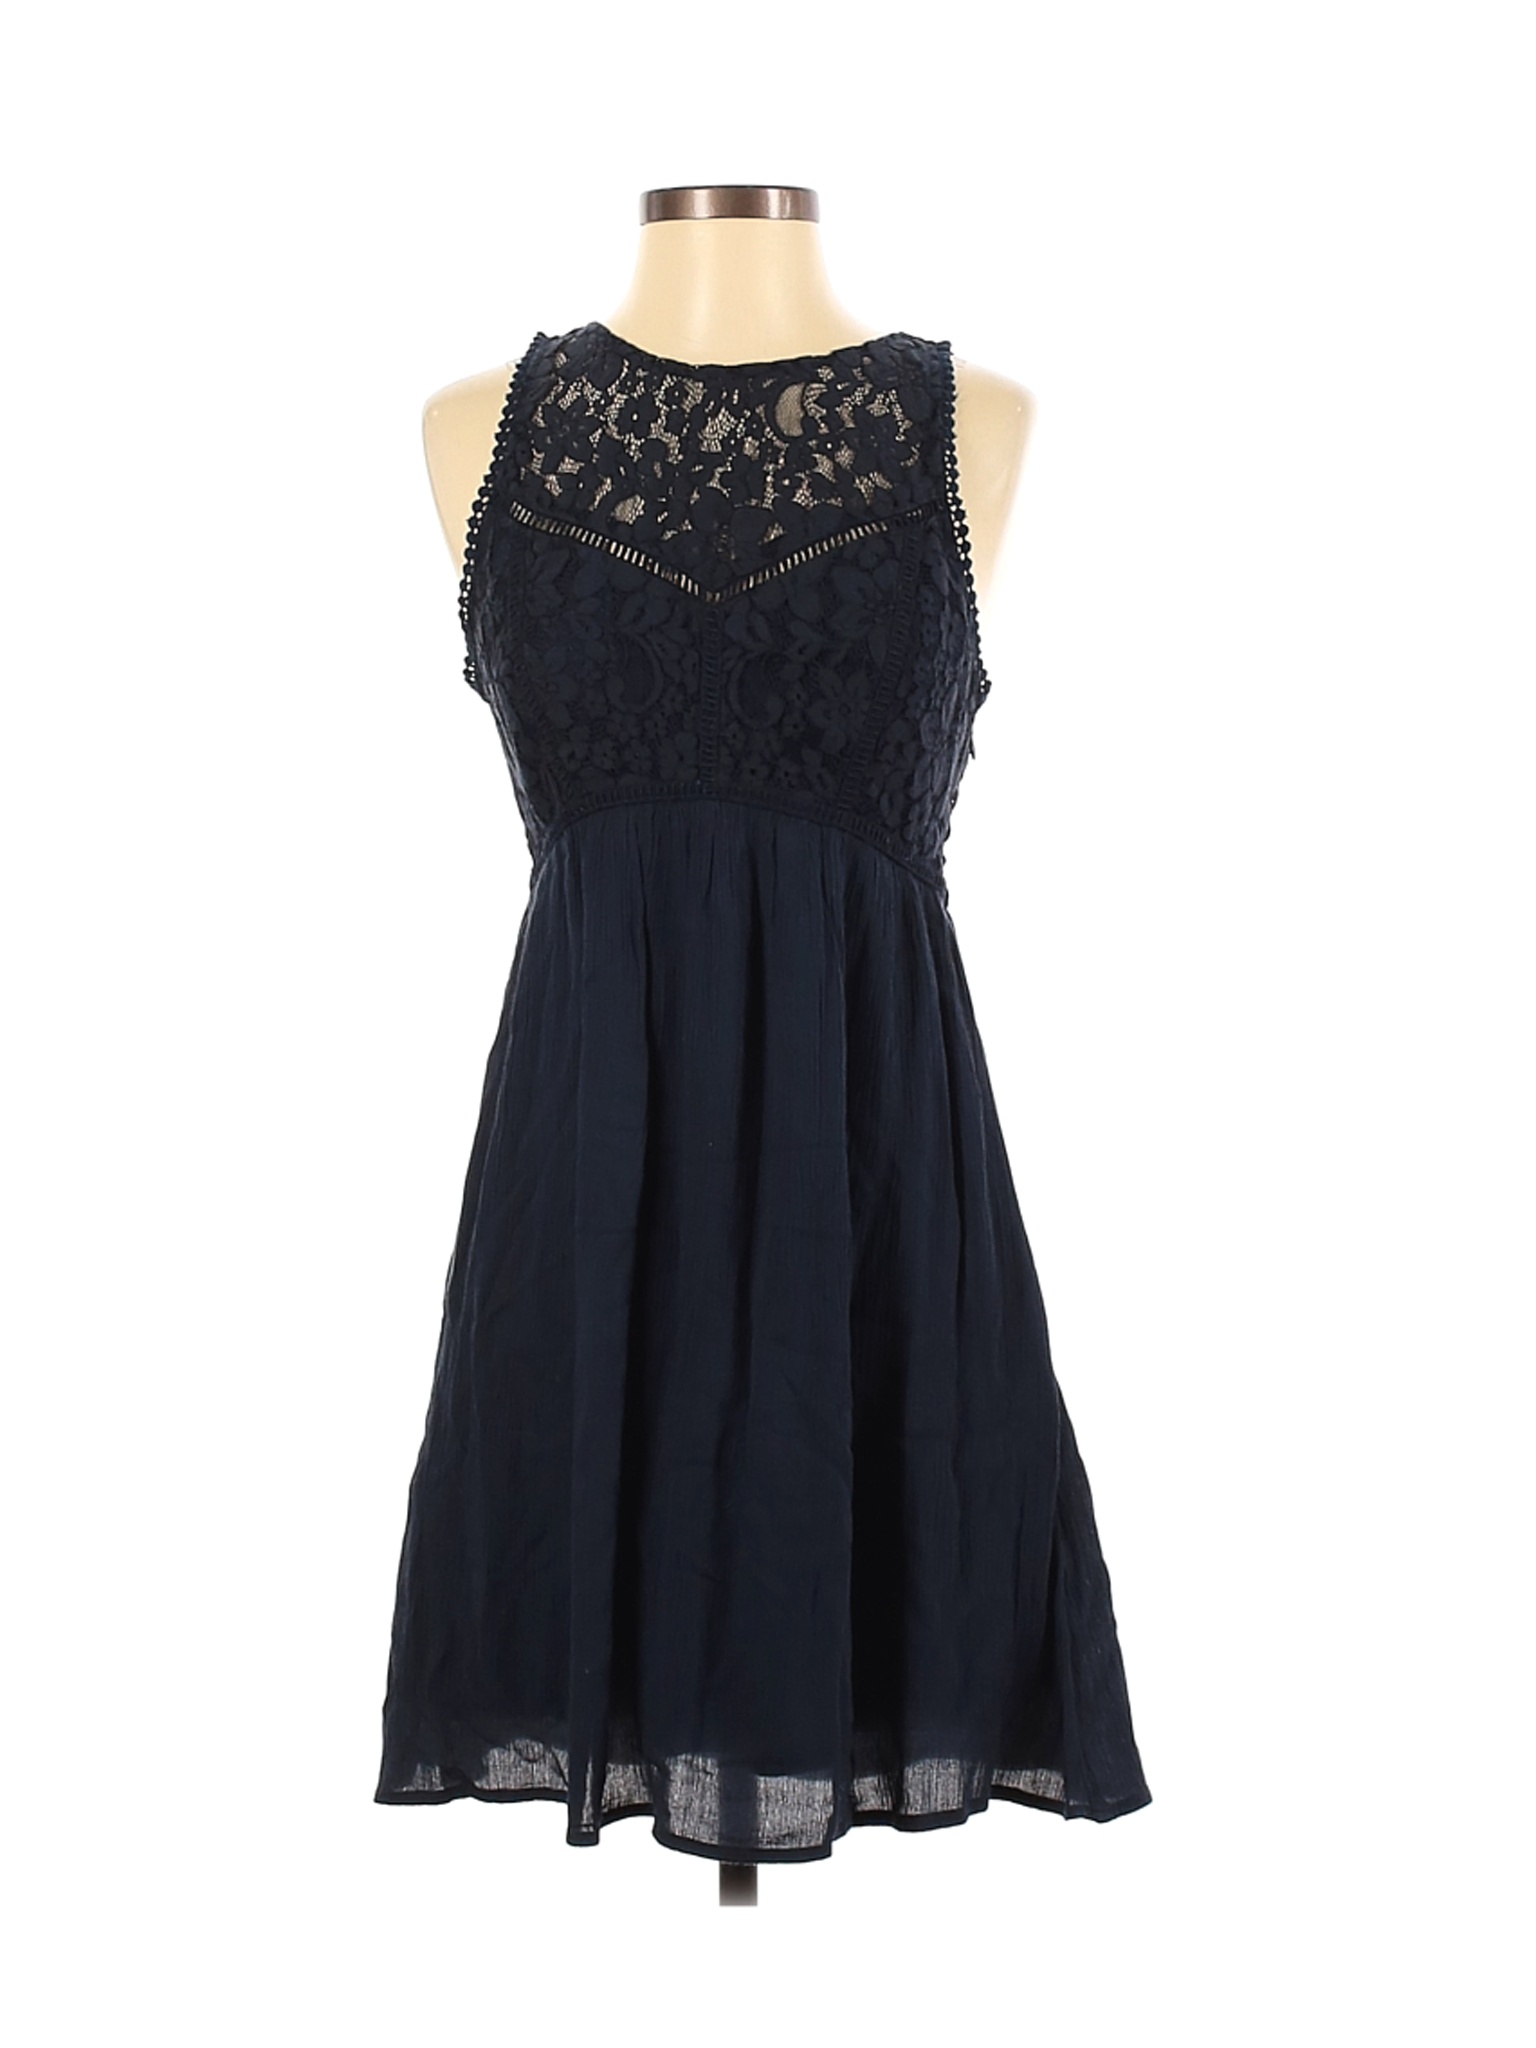 Abercrombie & Fitch Women Black Casual Dress S | eBay